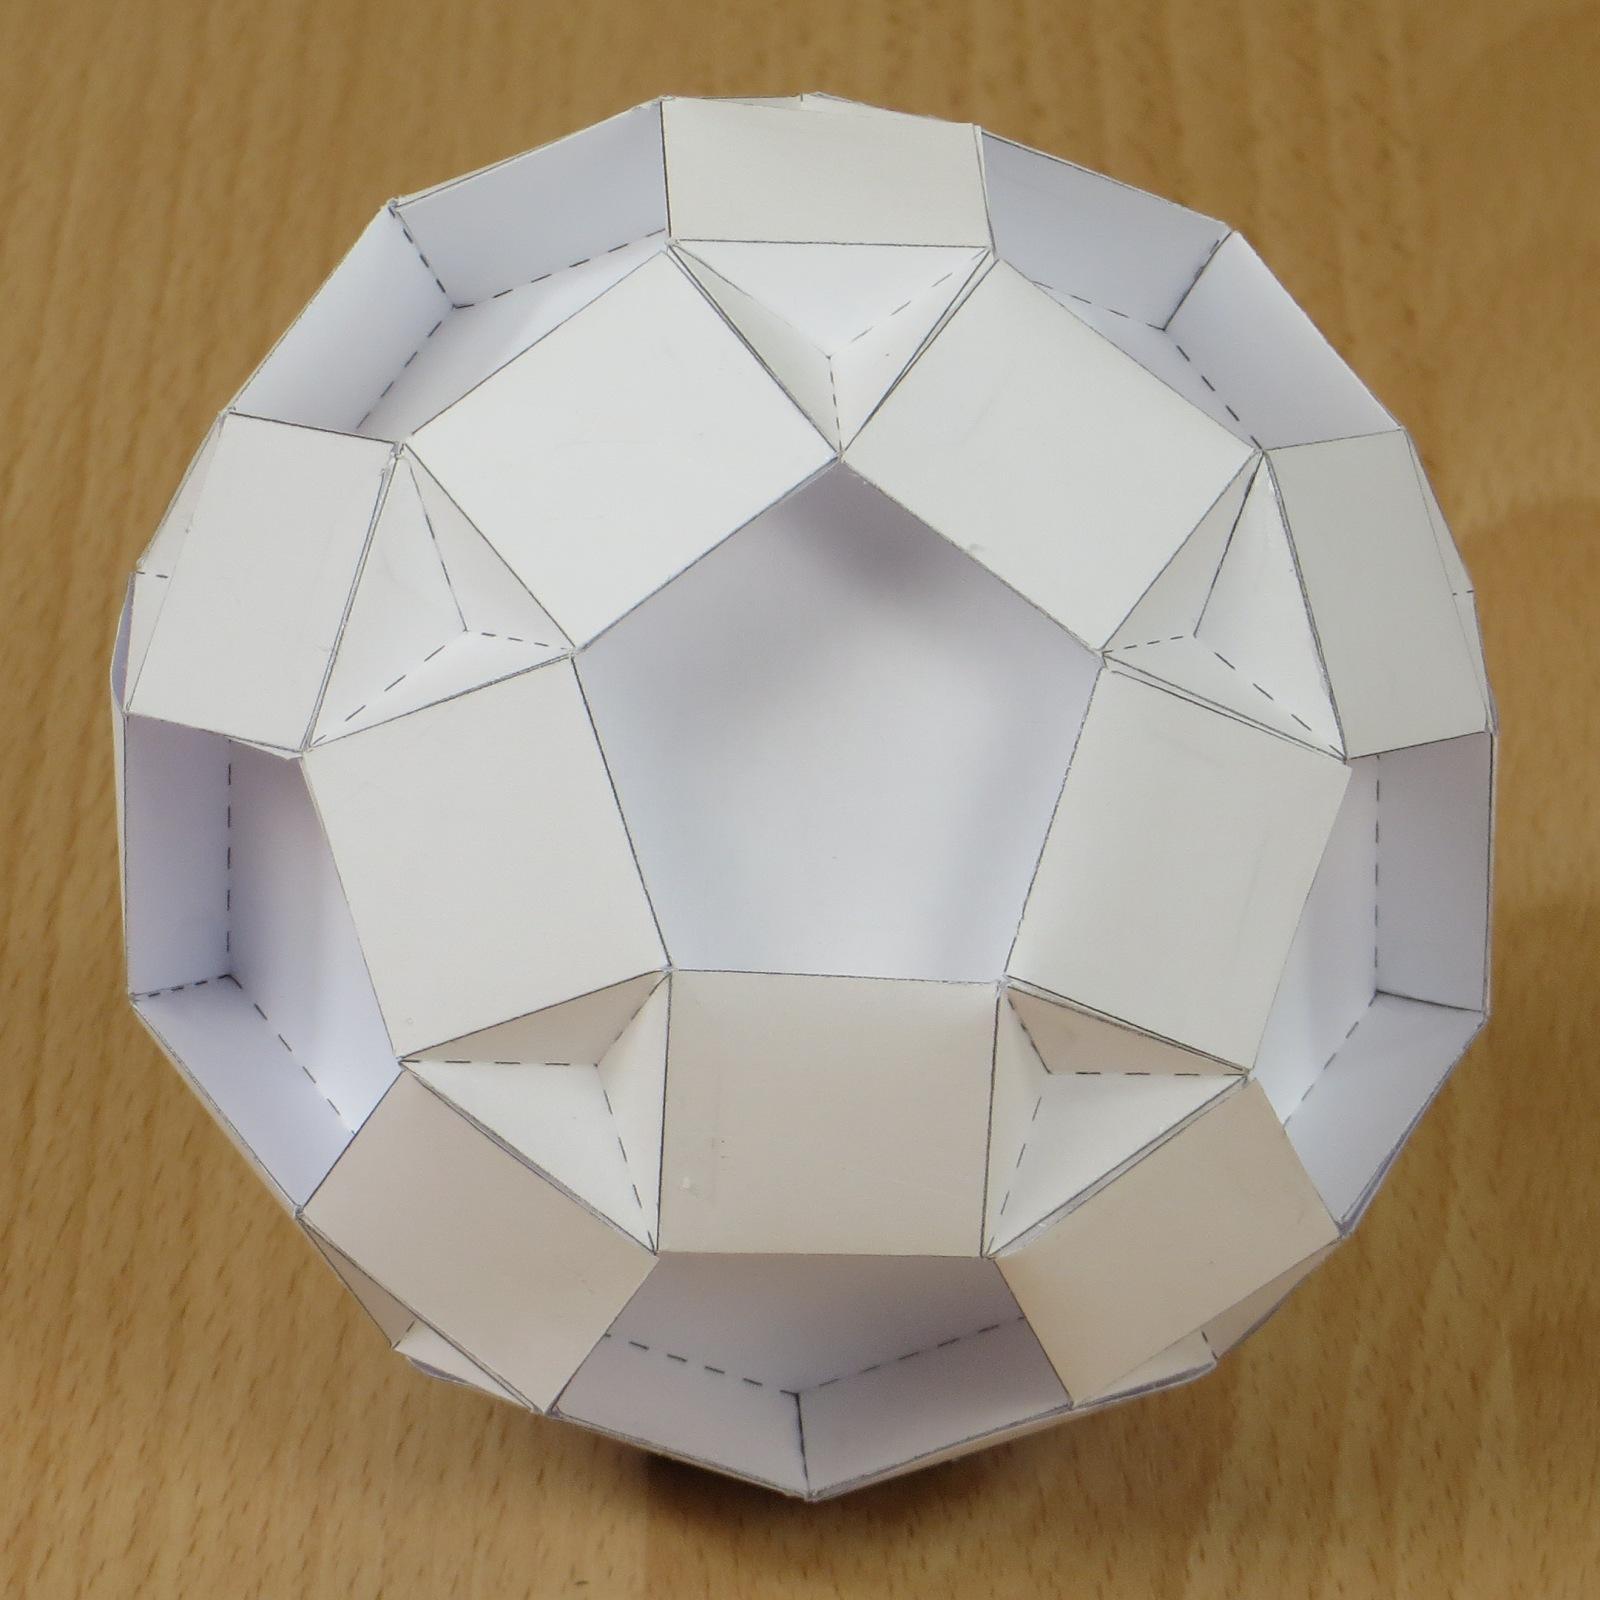 Rhombidodecahedron